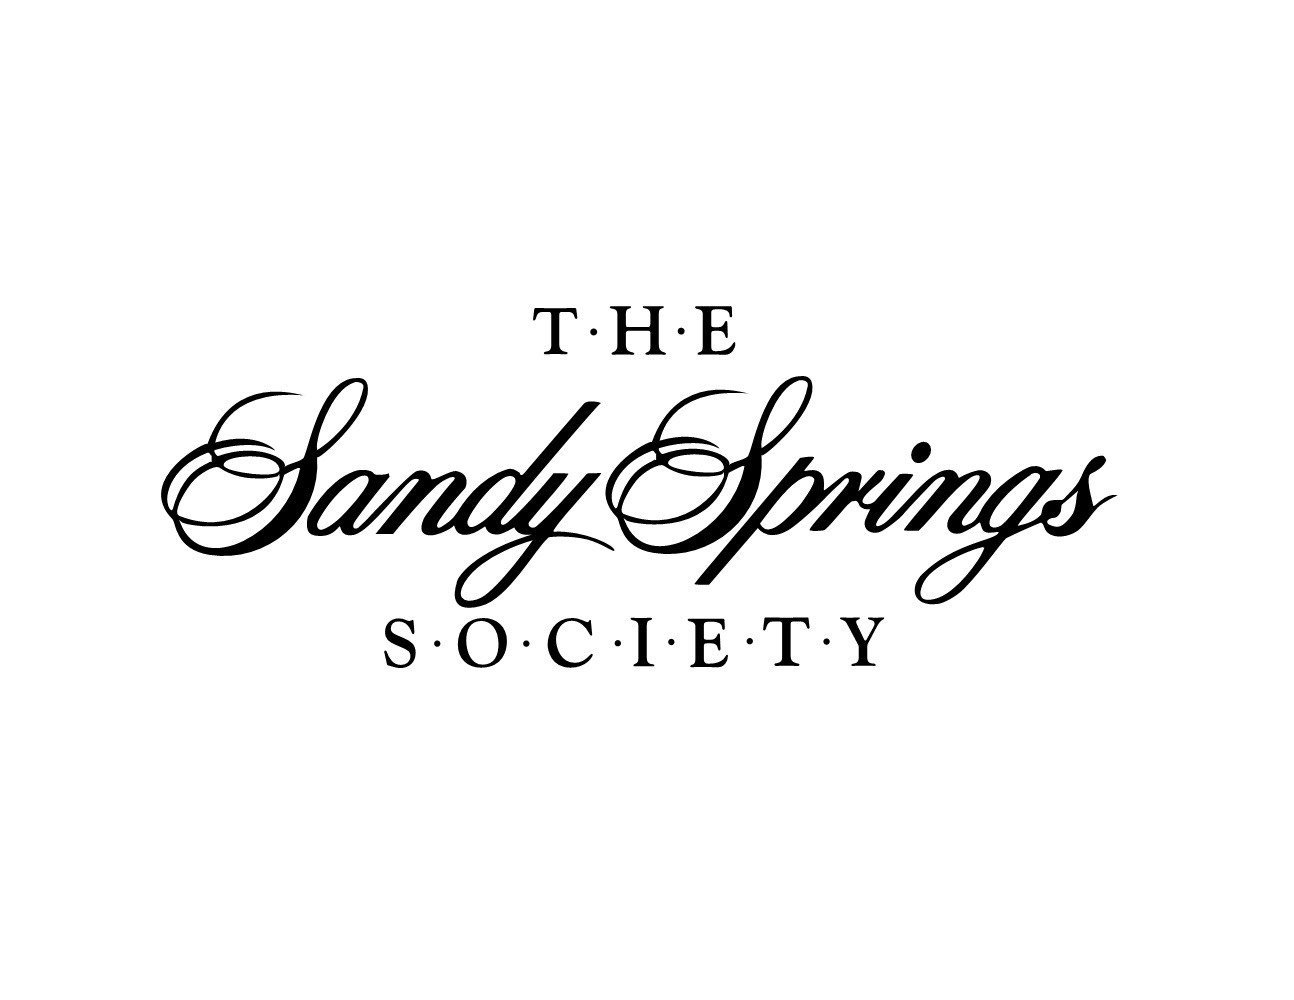 THANK YOU SANDY SPRINGS SOCIETY!